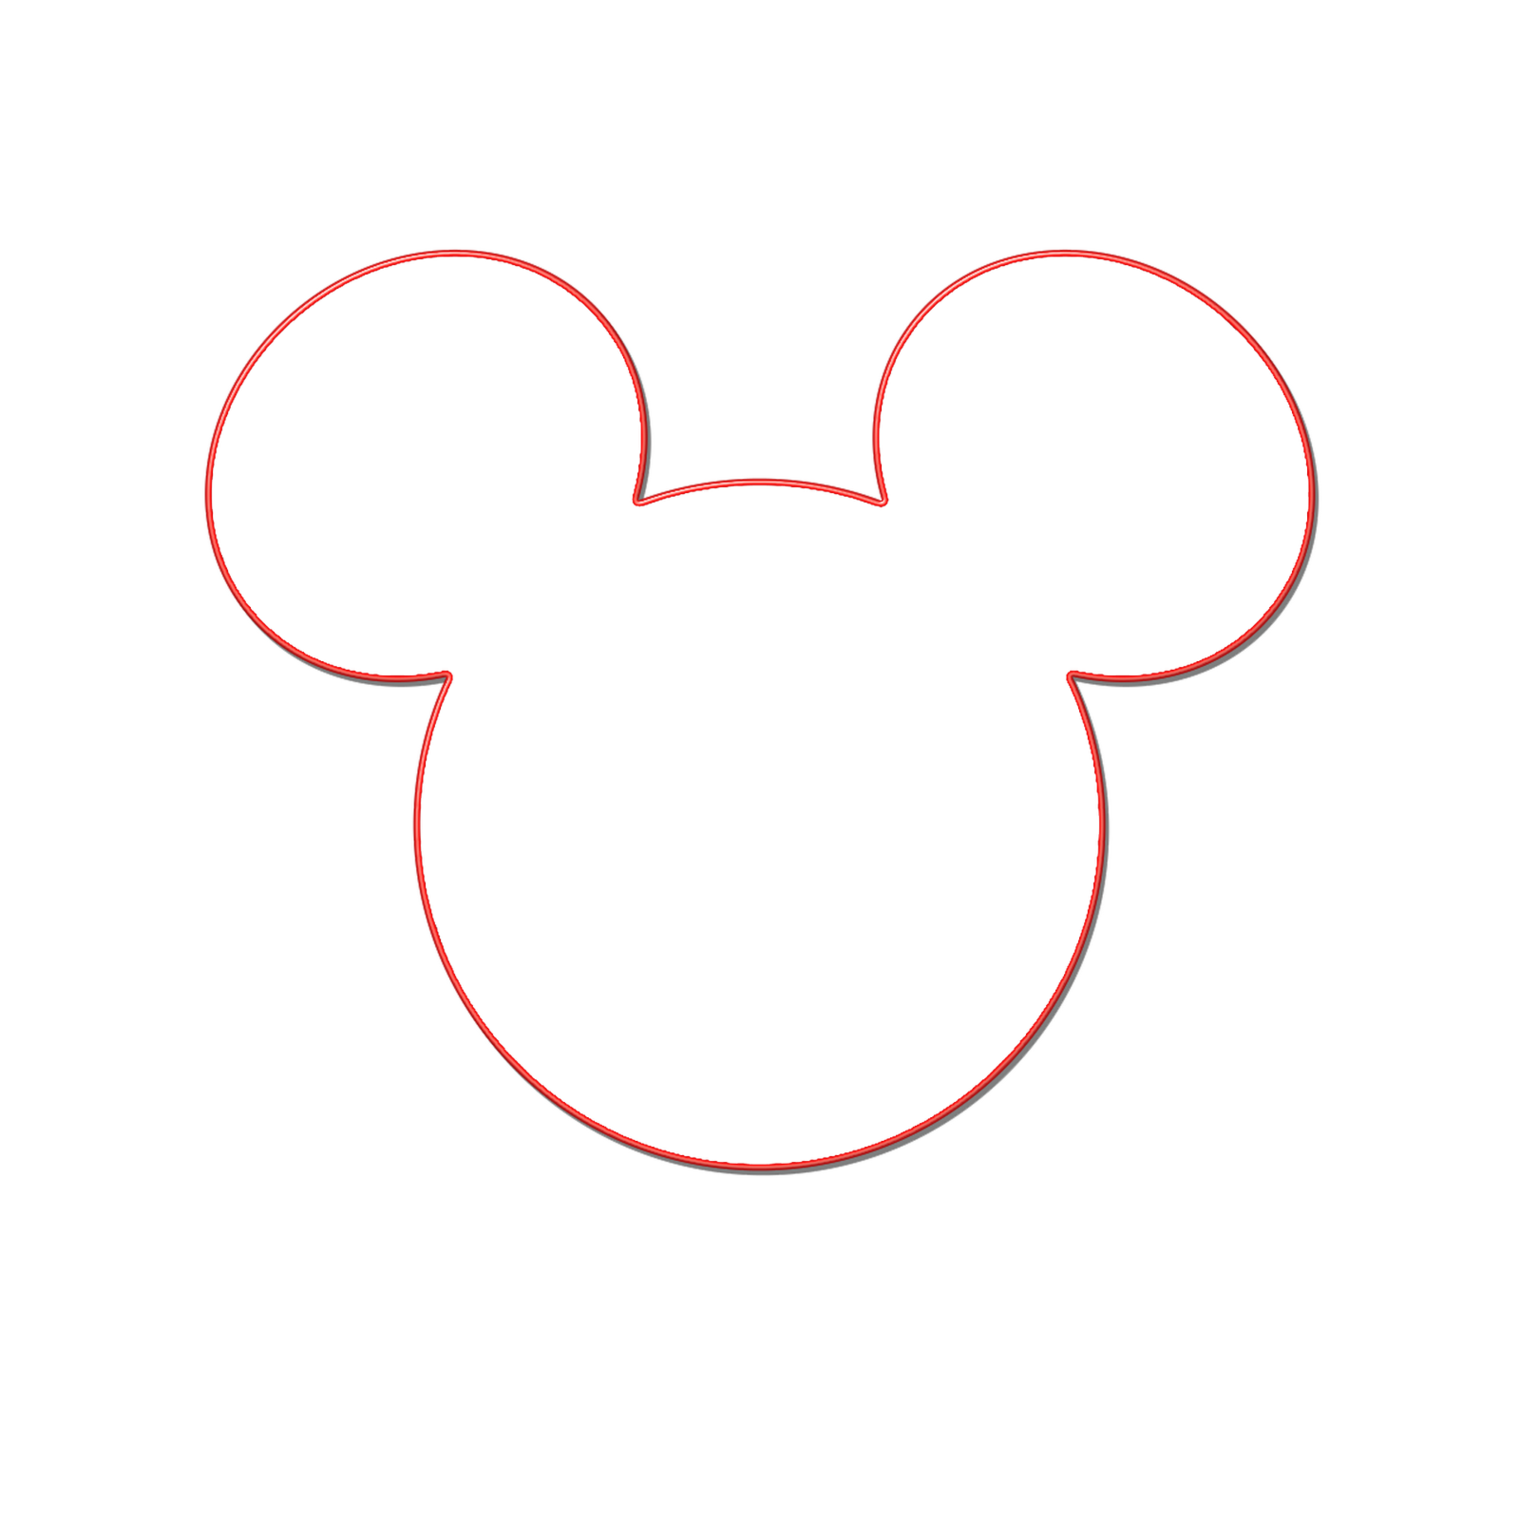 Pics For > Disney Mickey Ears Logo Clipart - Free to use Clip Art ...